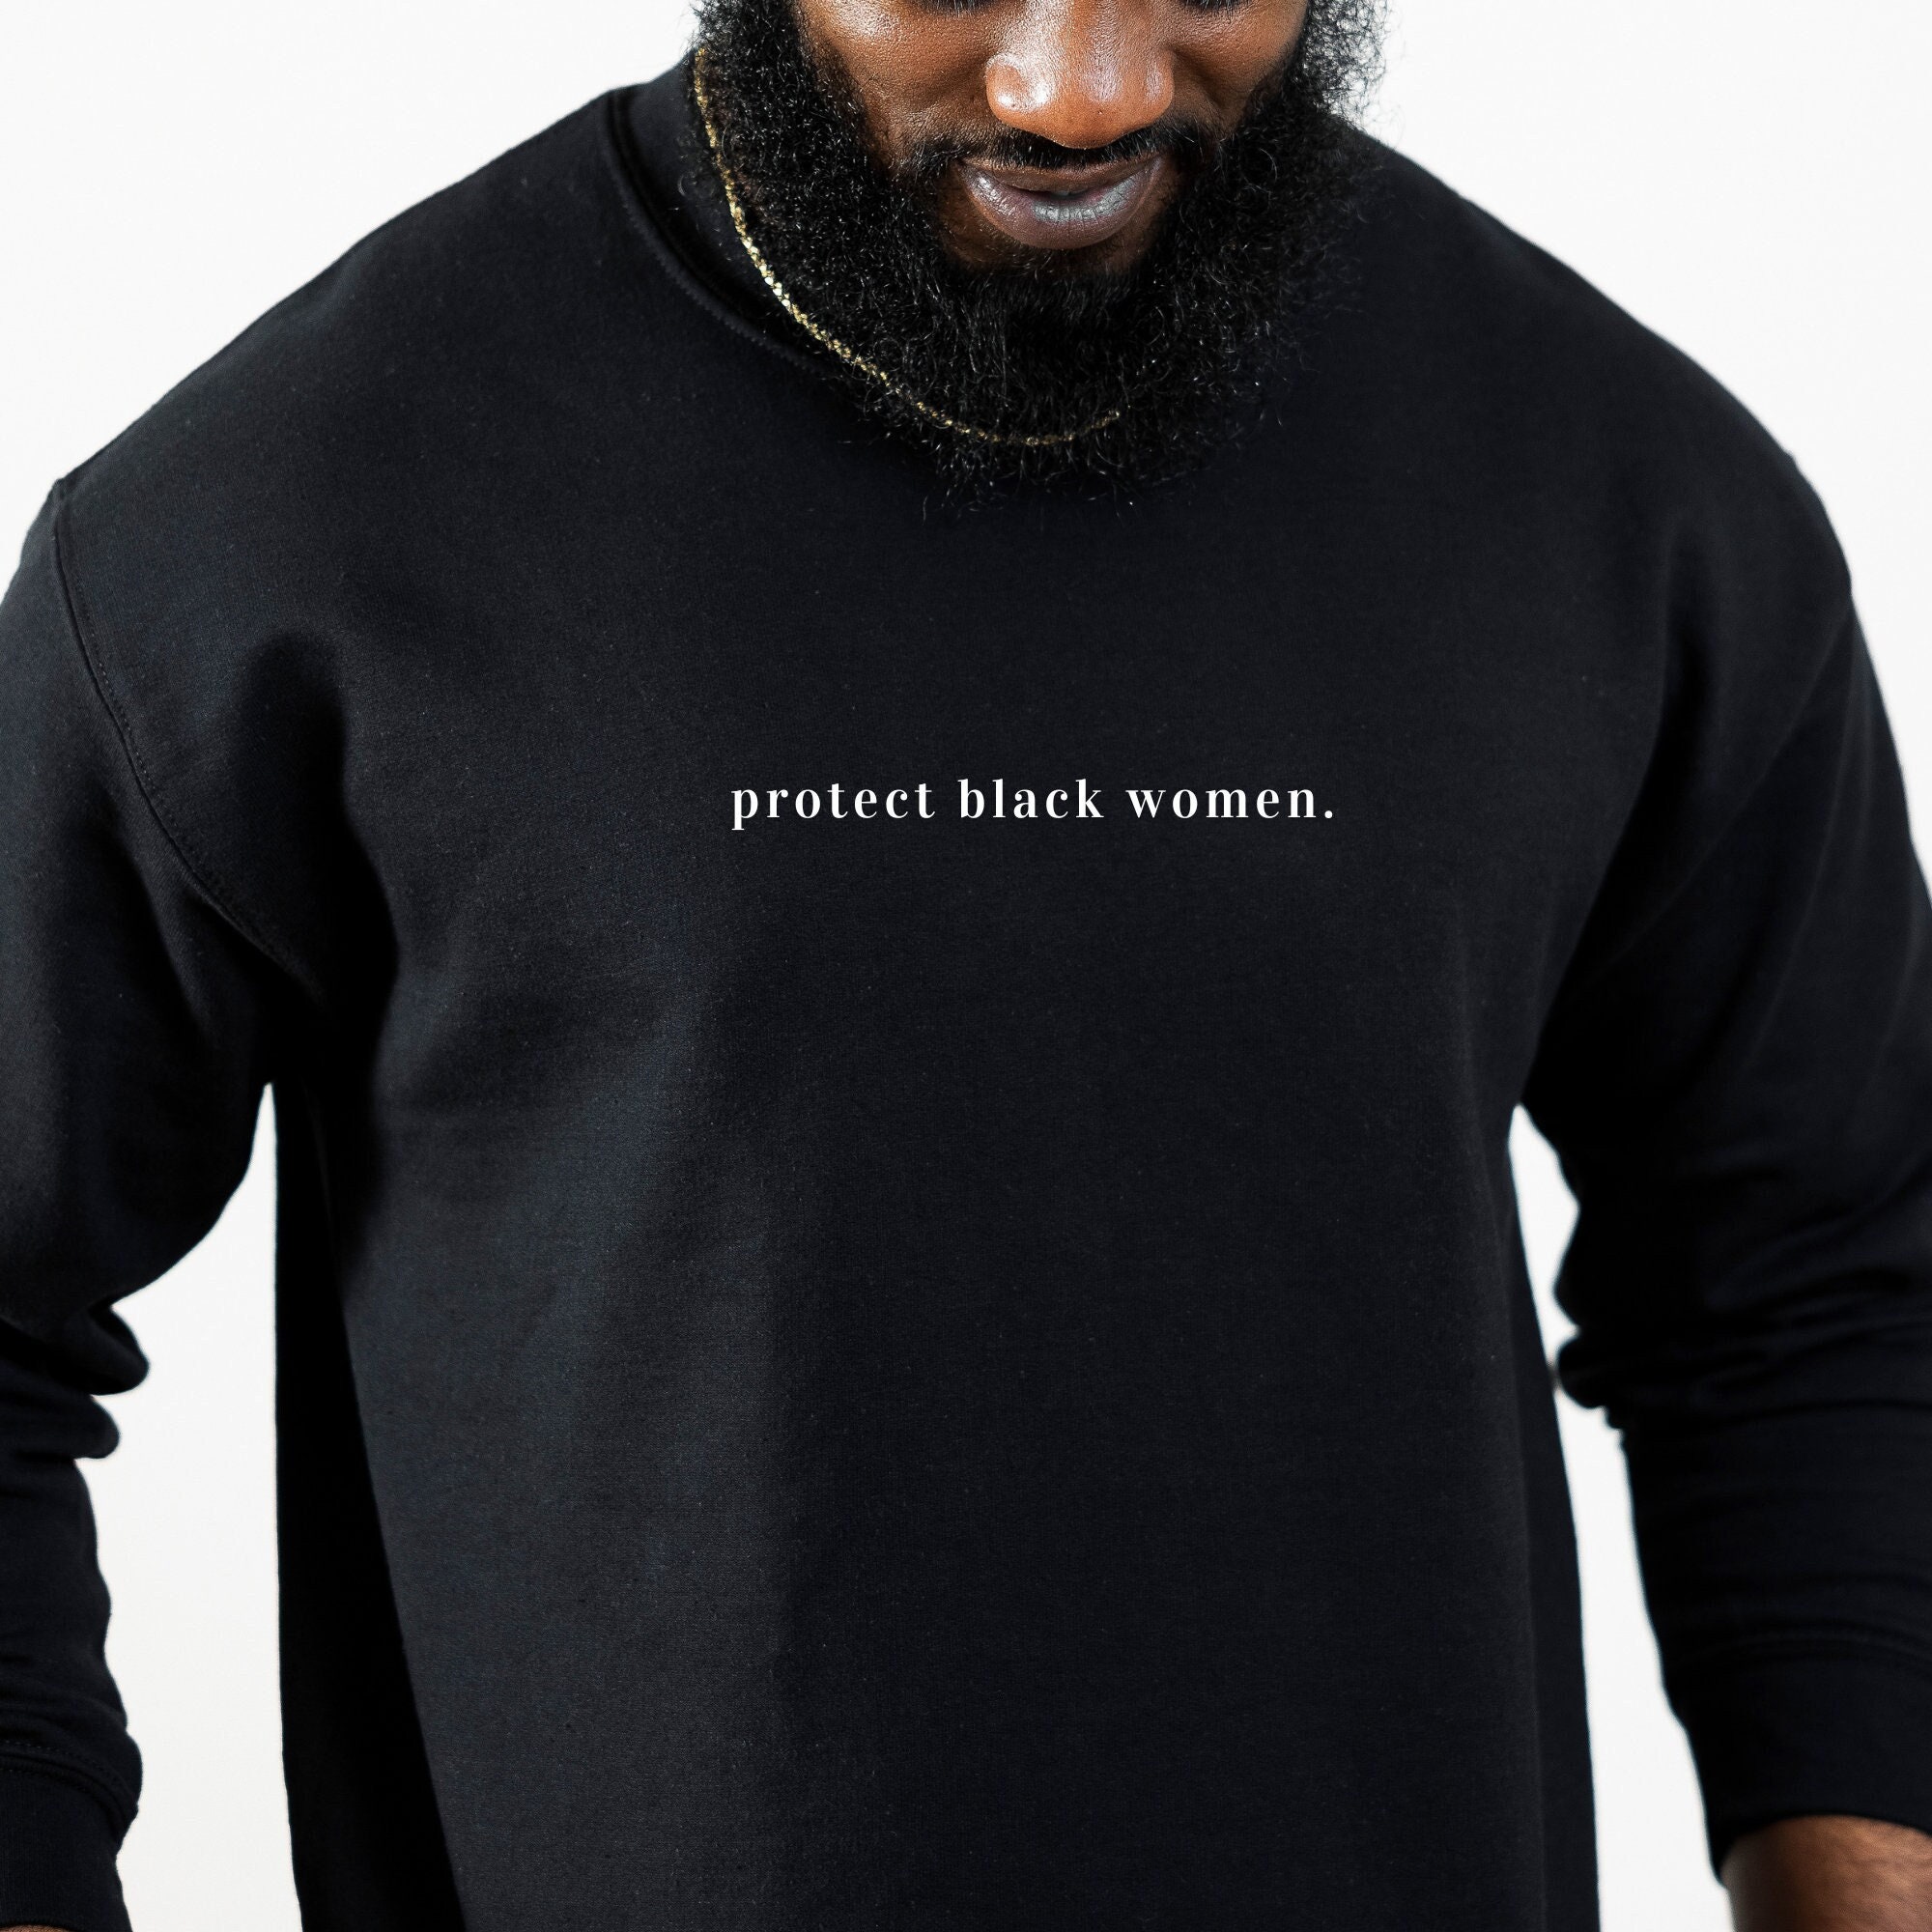 Protect Black Women, Black Owned Clothing, Black Lives Matter